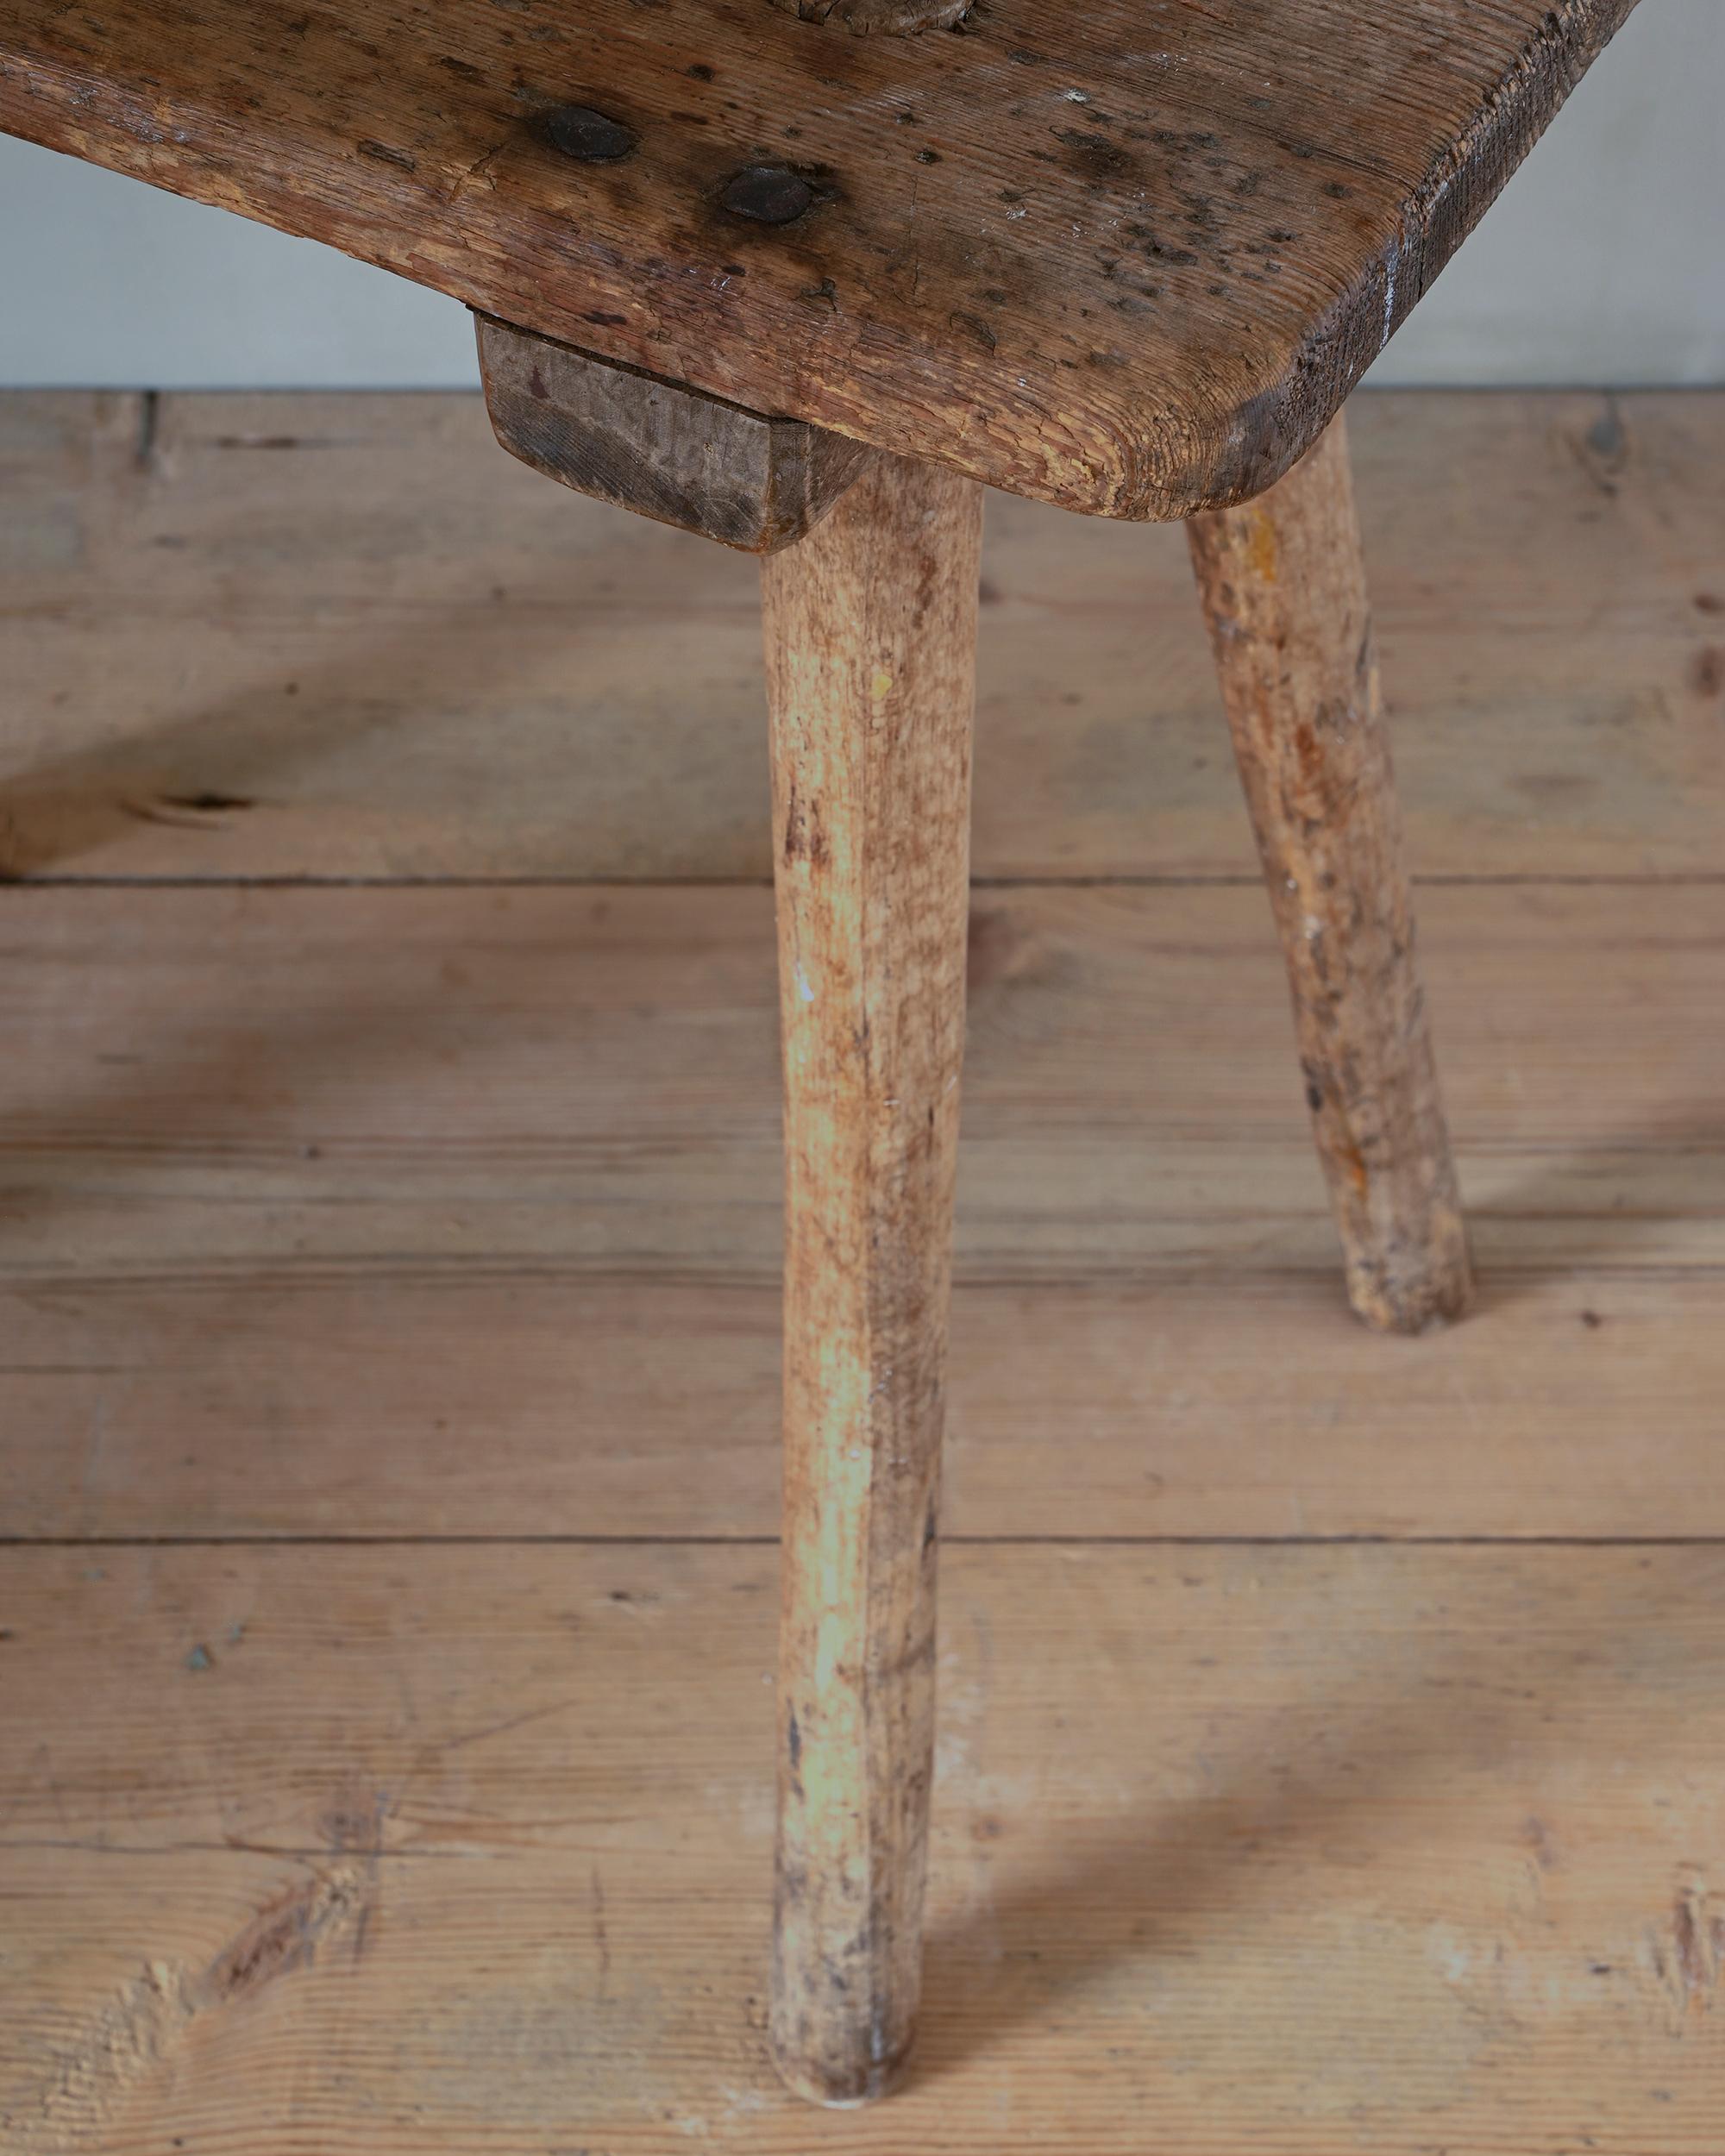 Pine Unusual Primitive 19th Century Swedish Chair For Sale